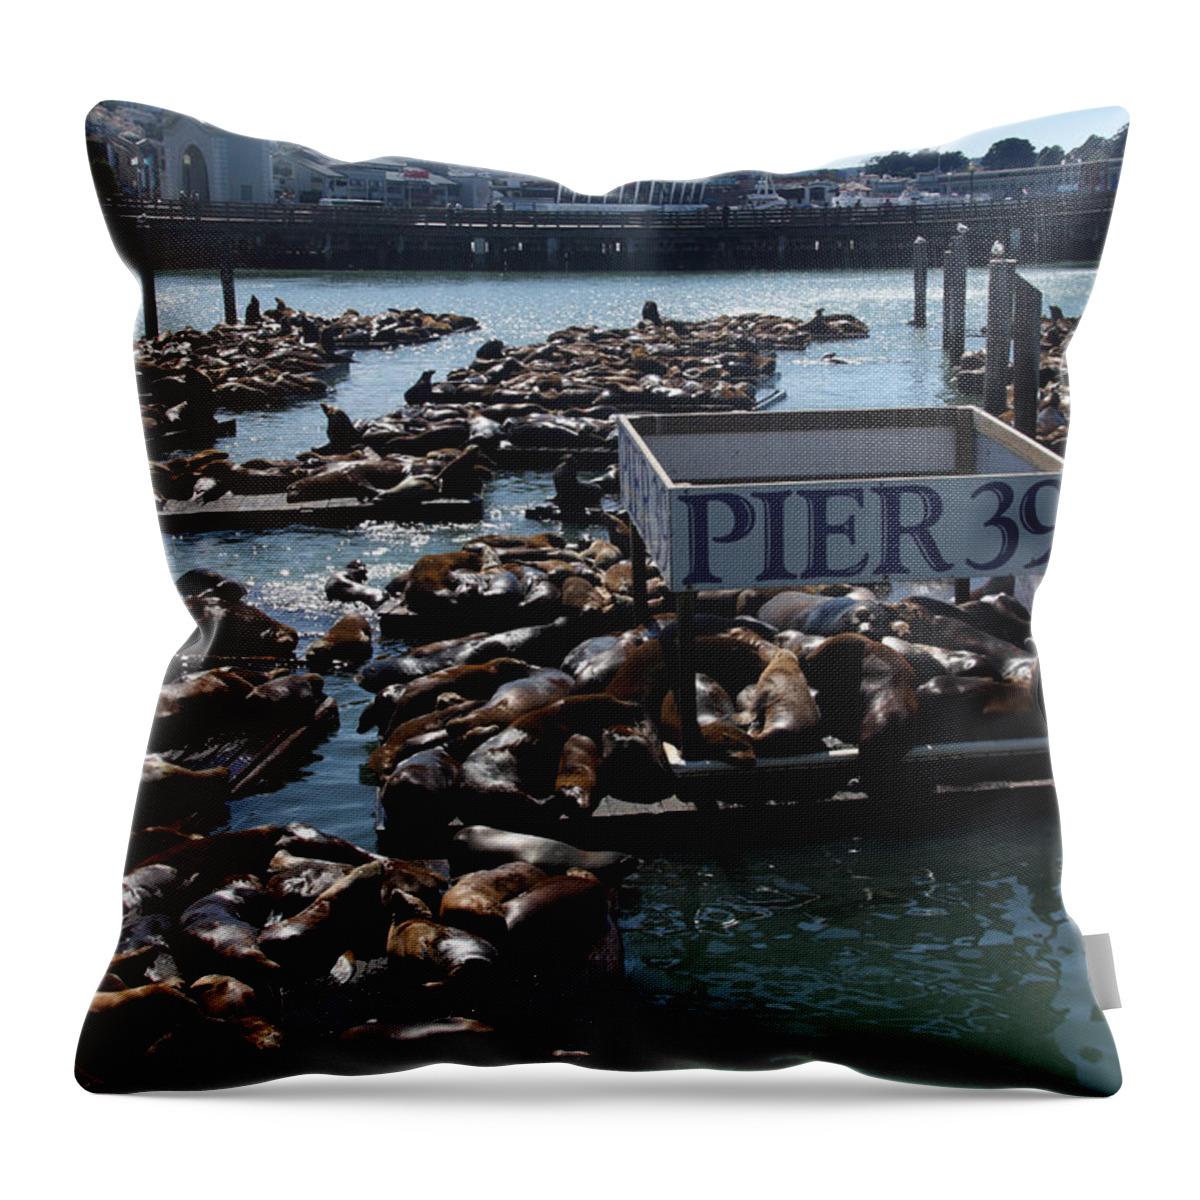 Seals Throw Pillow featuring the photograph Pier 39 San Francisco Bay by Aidan Moran